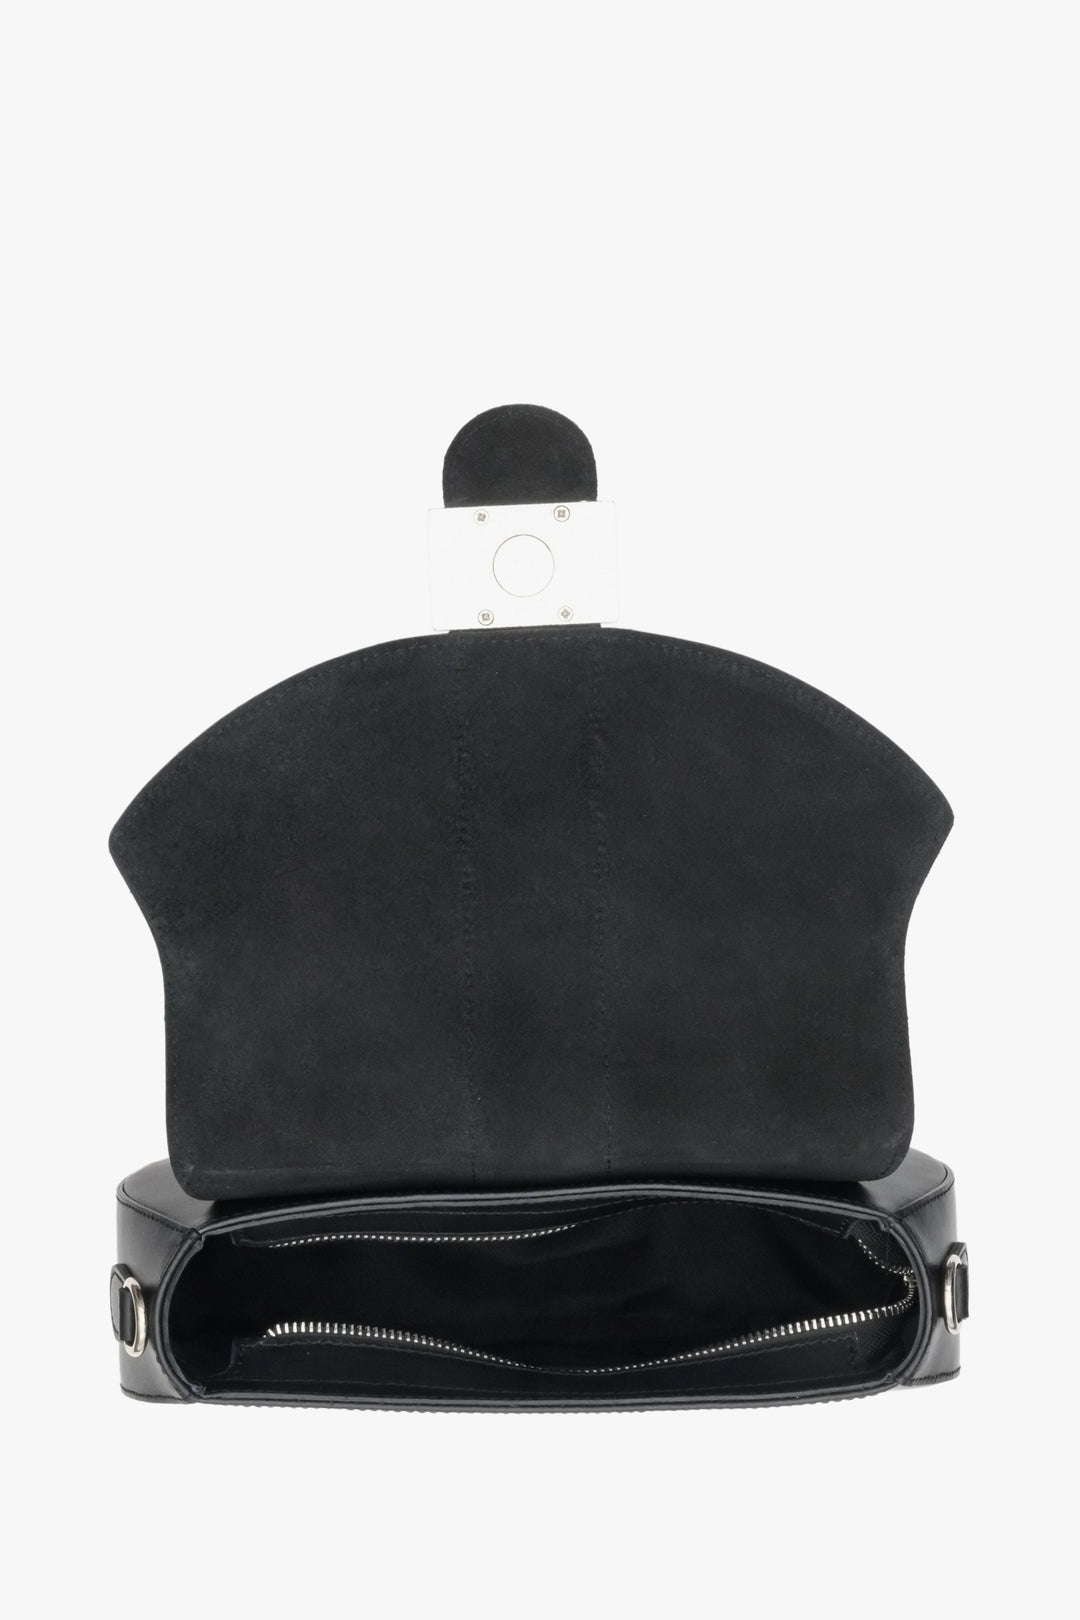 Medium-sized women's black leather handbag by Estro - interior view of the model.